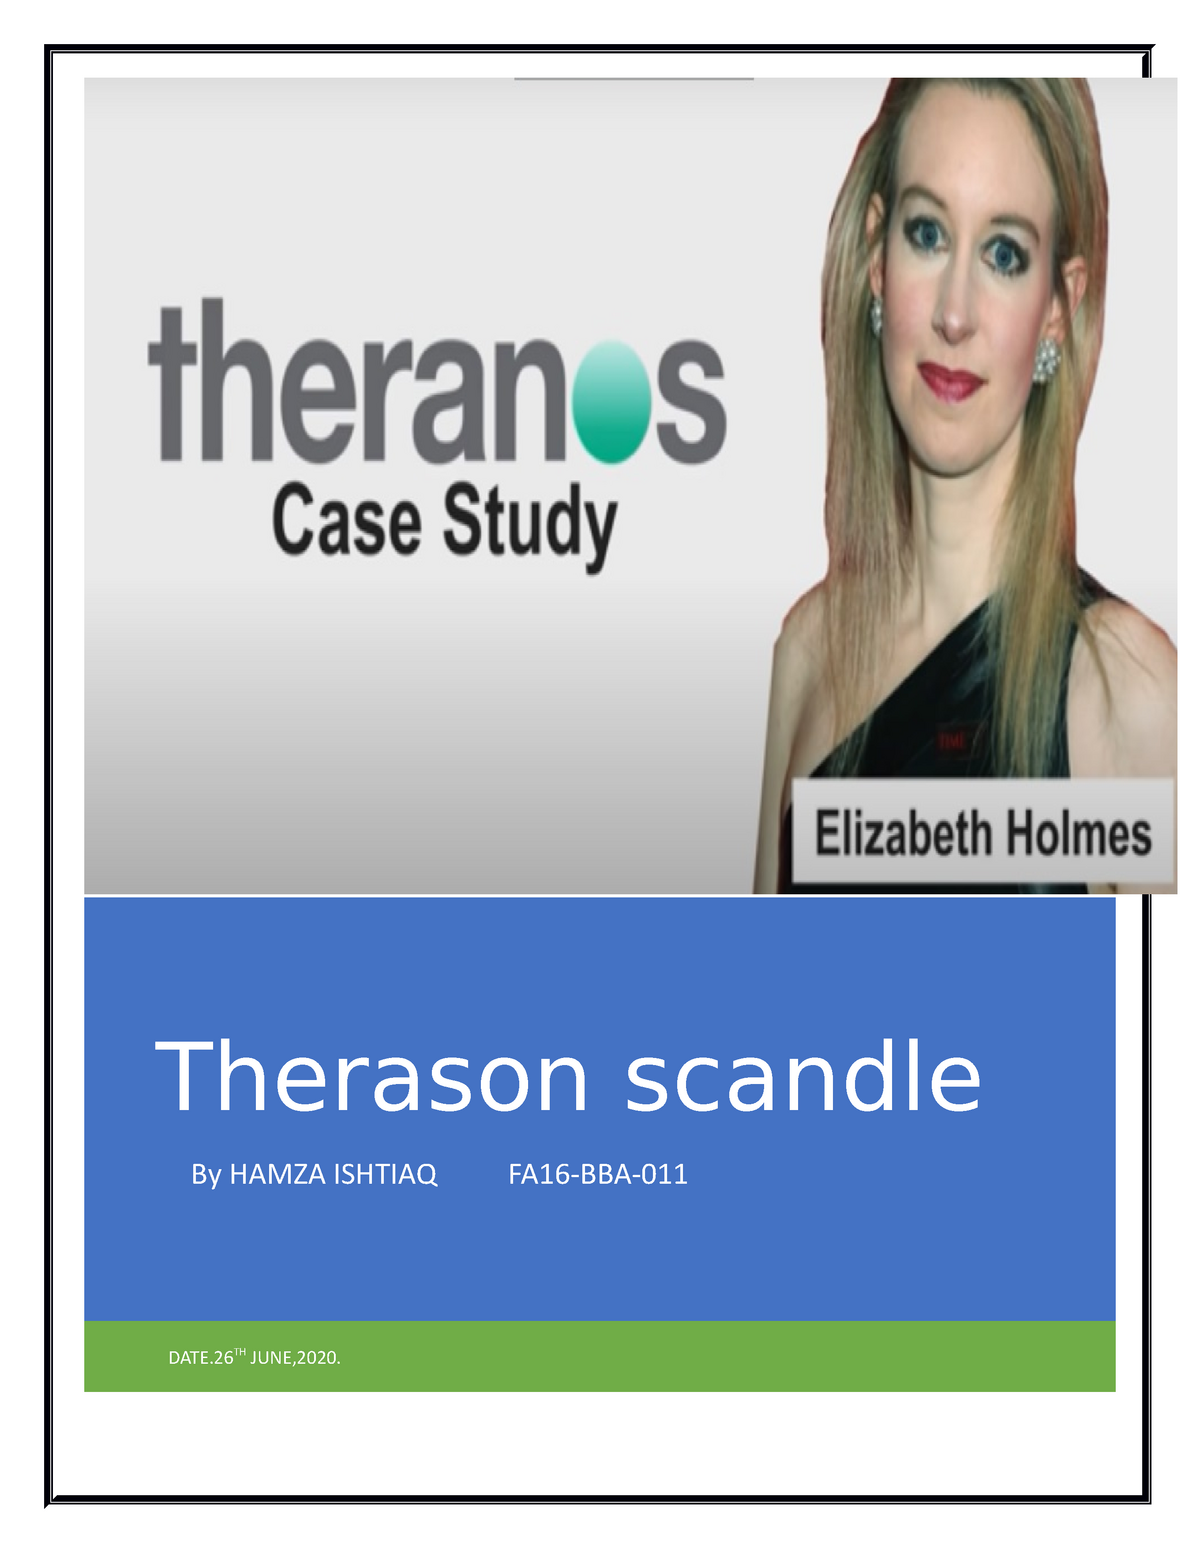 case study on theranos